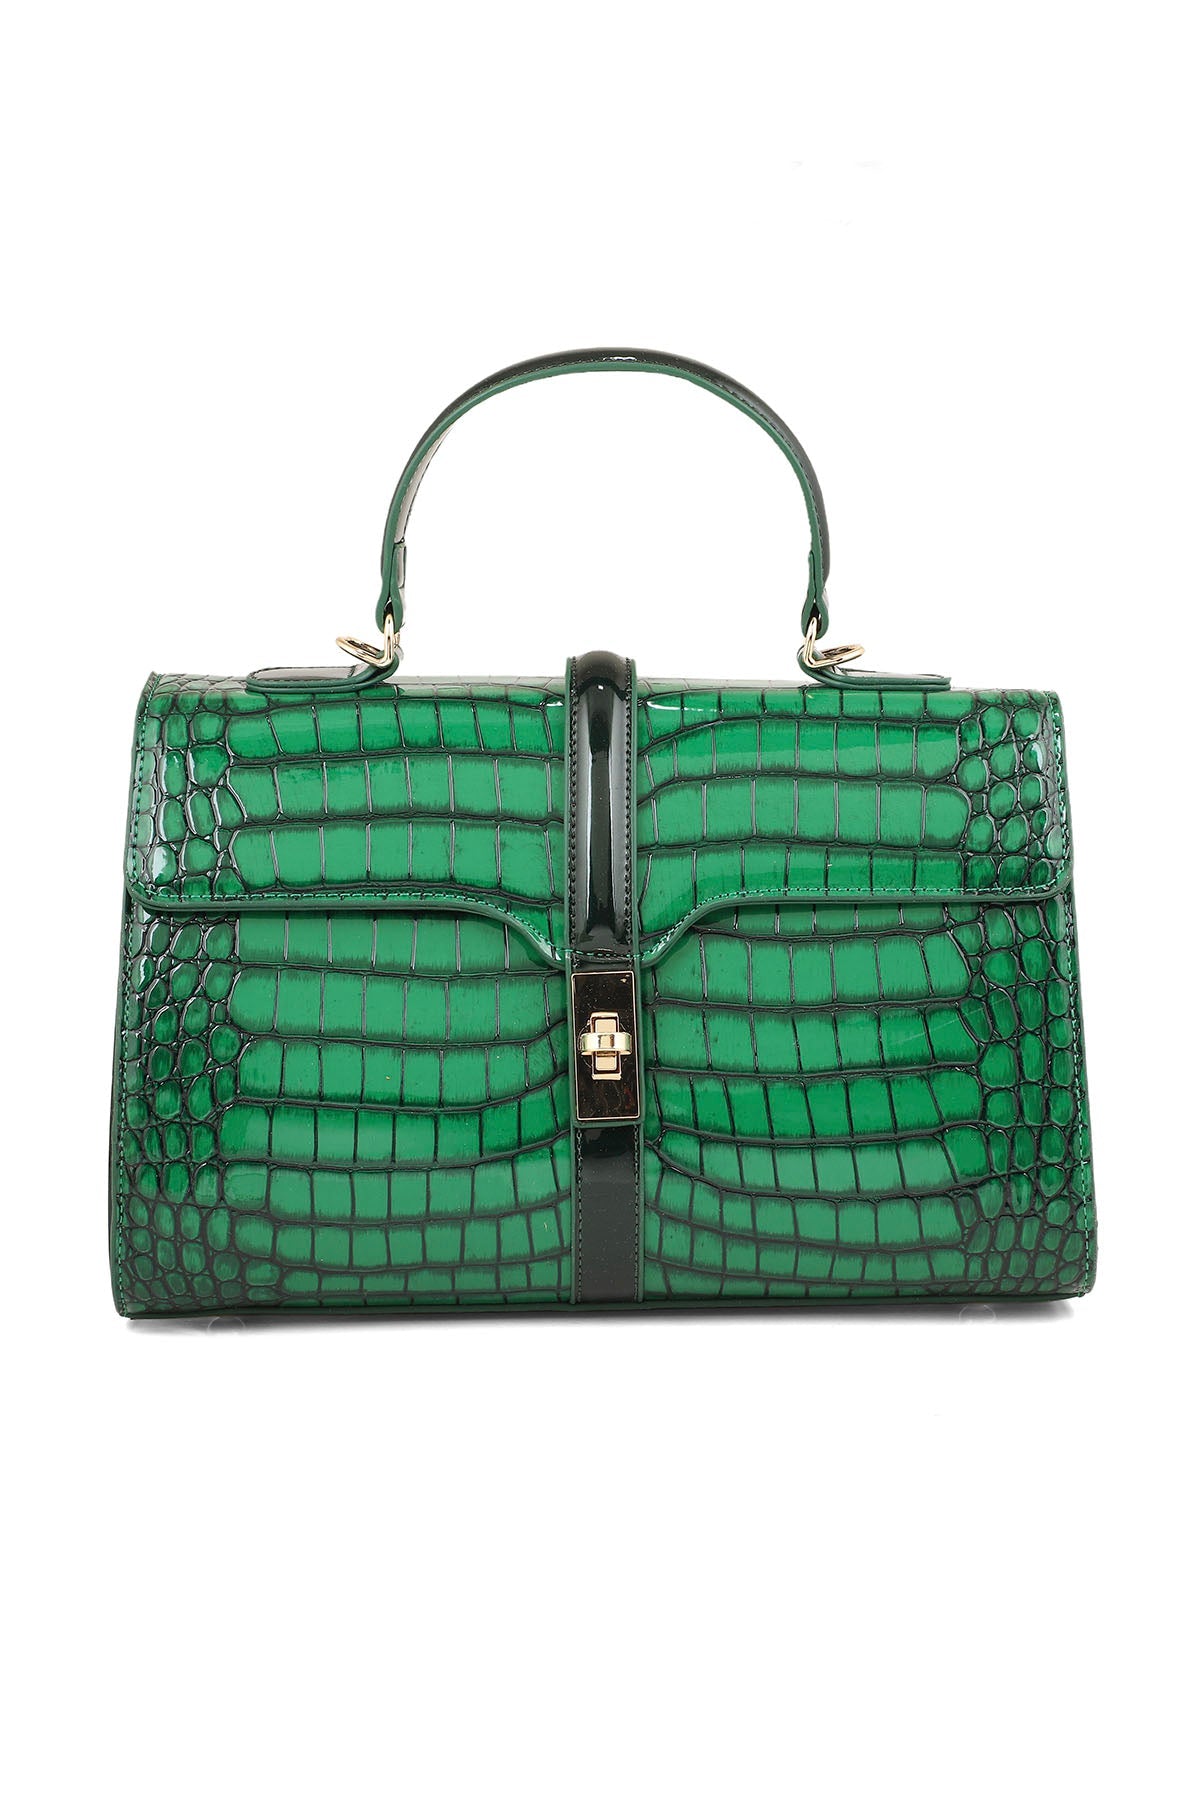 Top Handle Hand Bags B15099-Green